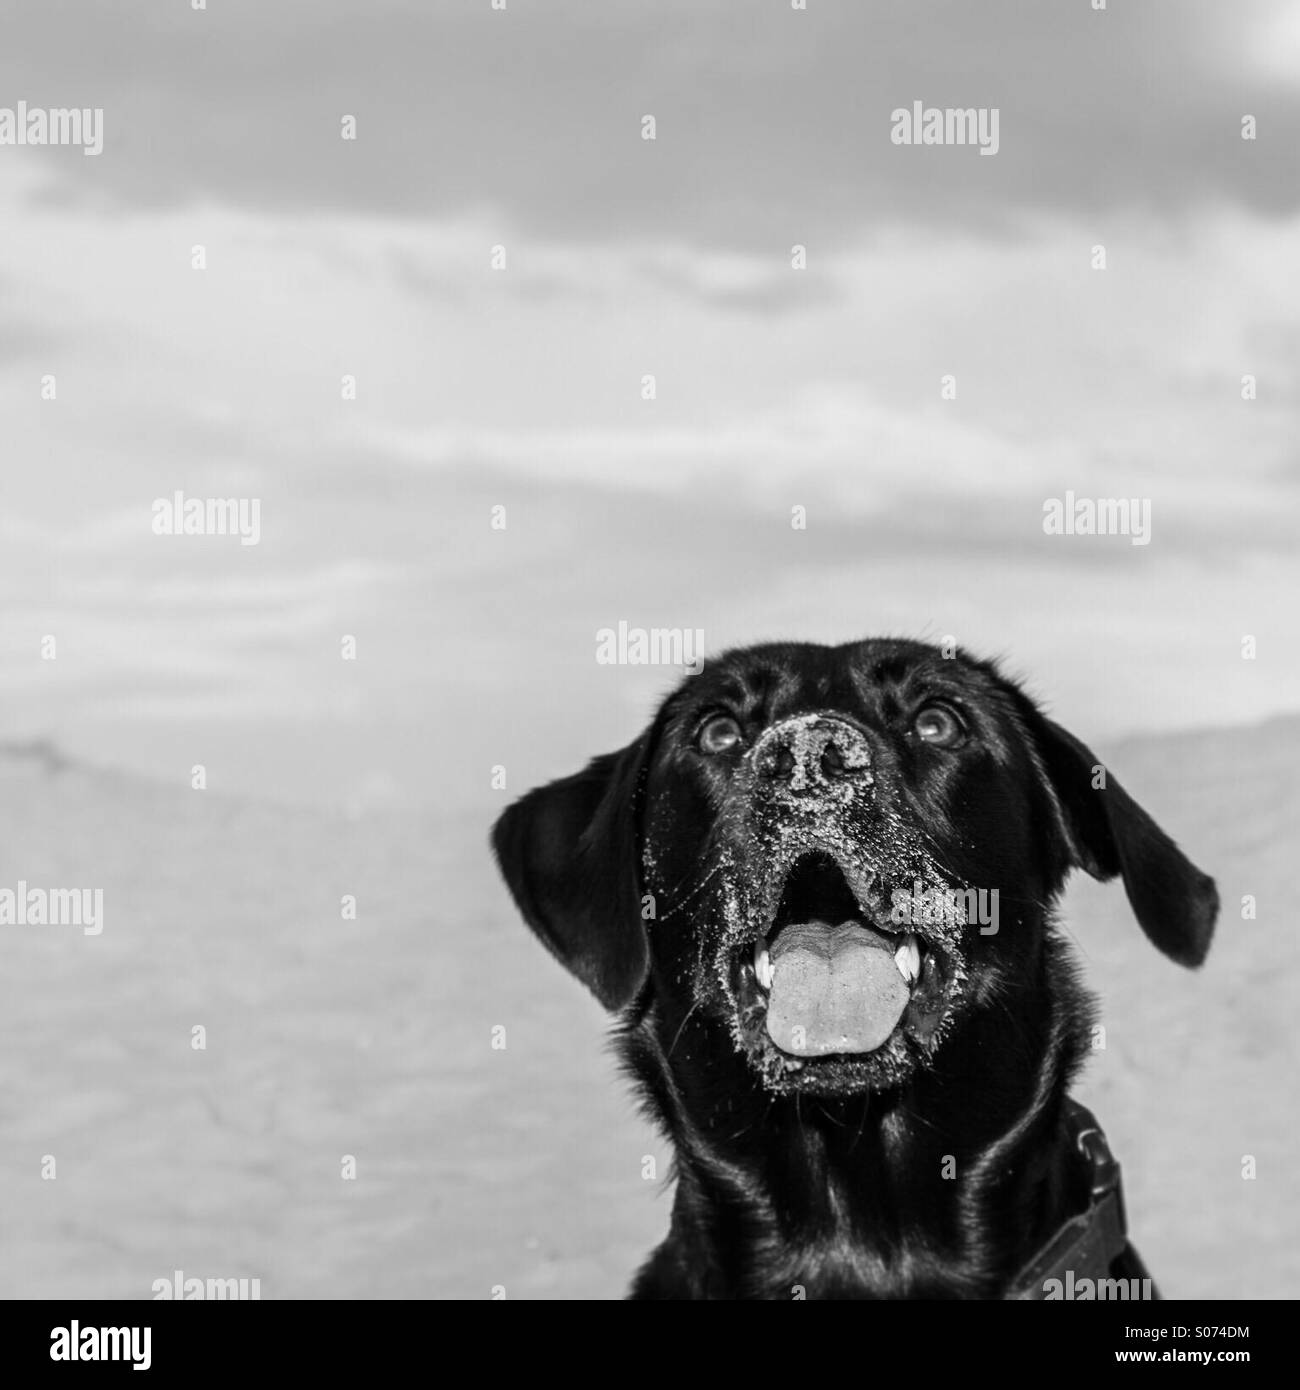 Cute black labrador dog portrait in black and white Stock Photo